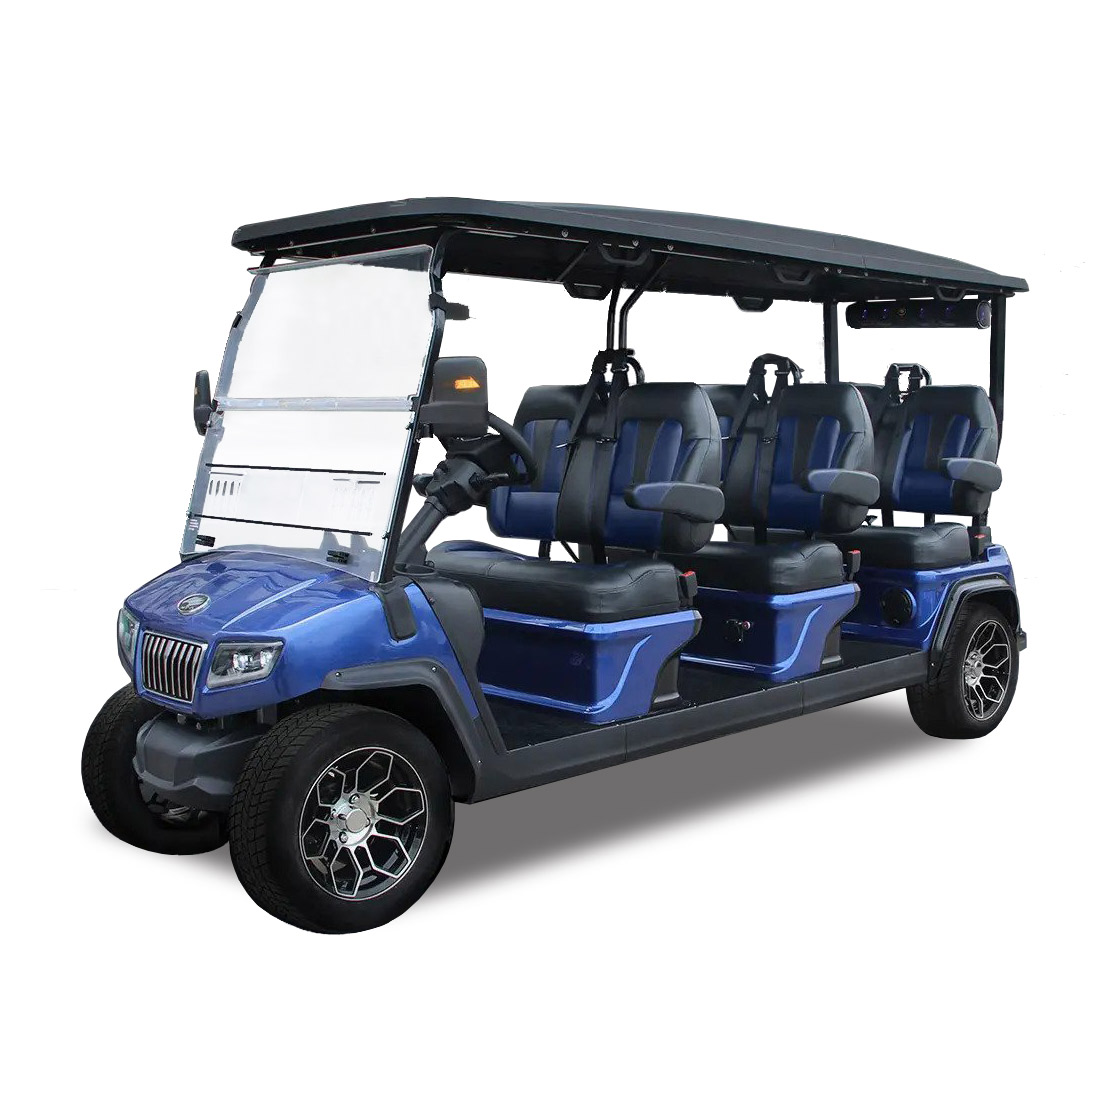 Evolution D5 Maverick-6 Golf Cart – Is this the Ultimate Street-Legal Golf Cart?